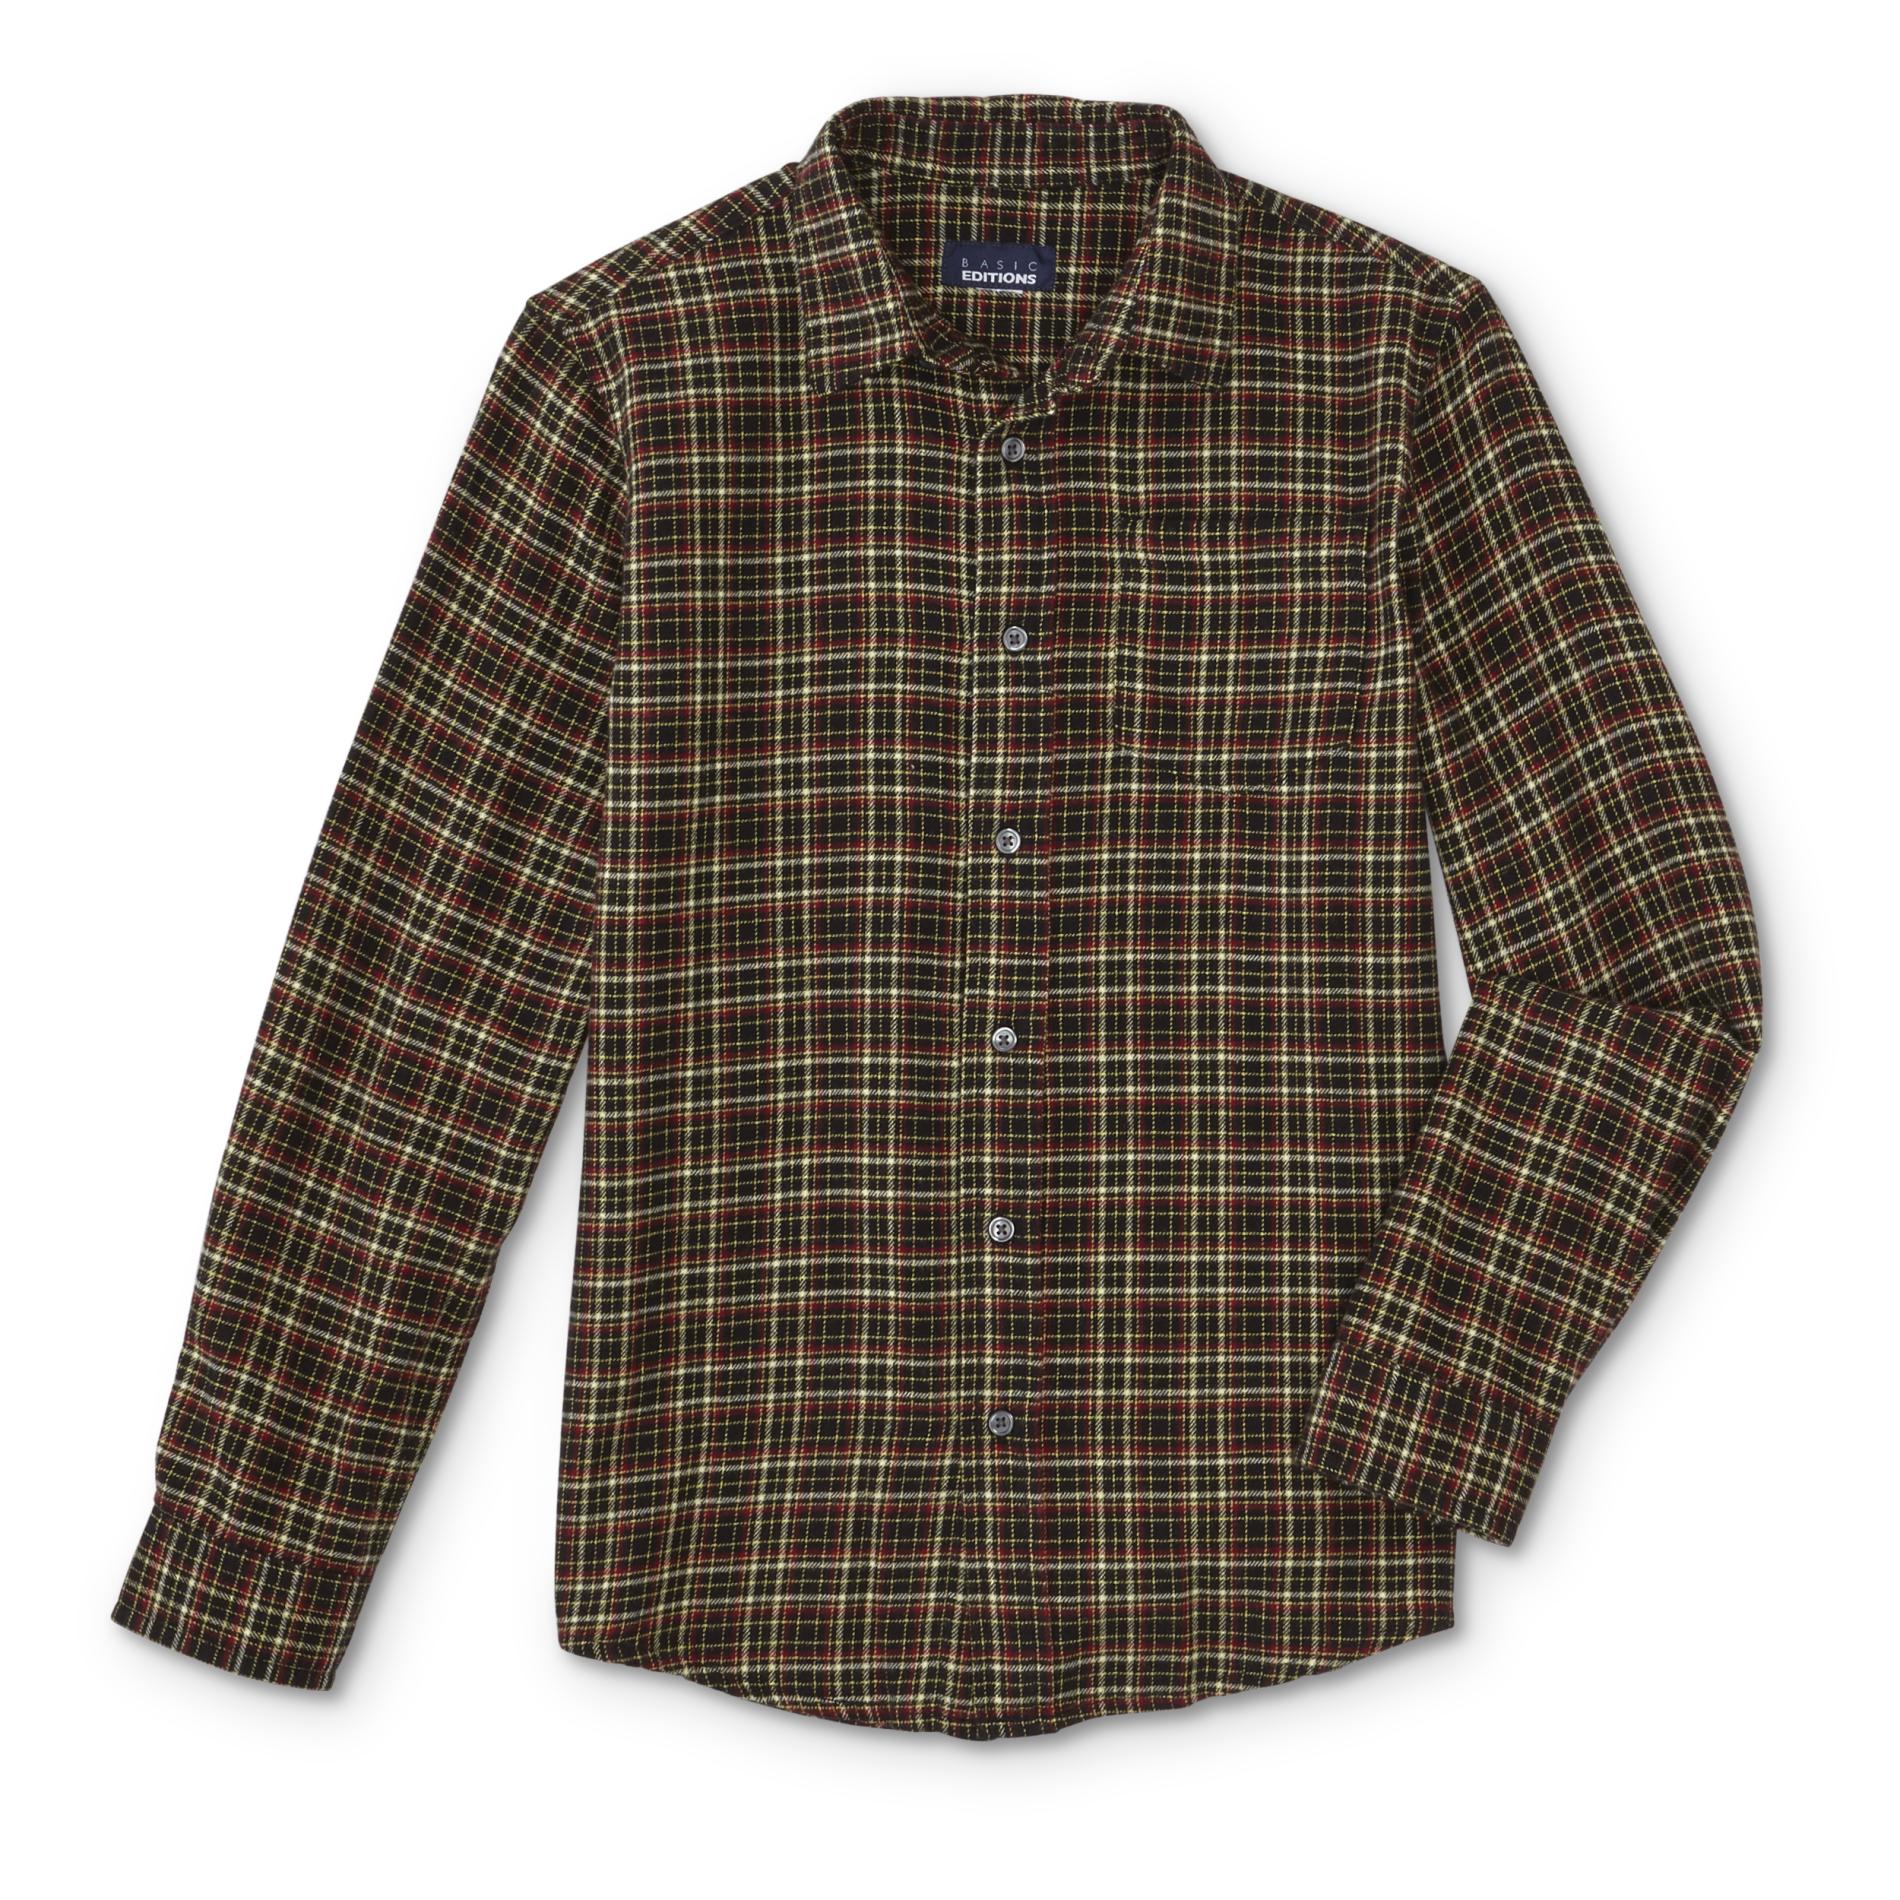 Basic Editions Boys' Flannel Shirt - Plaid